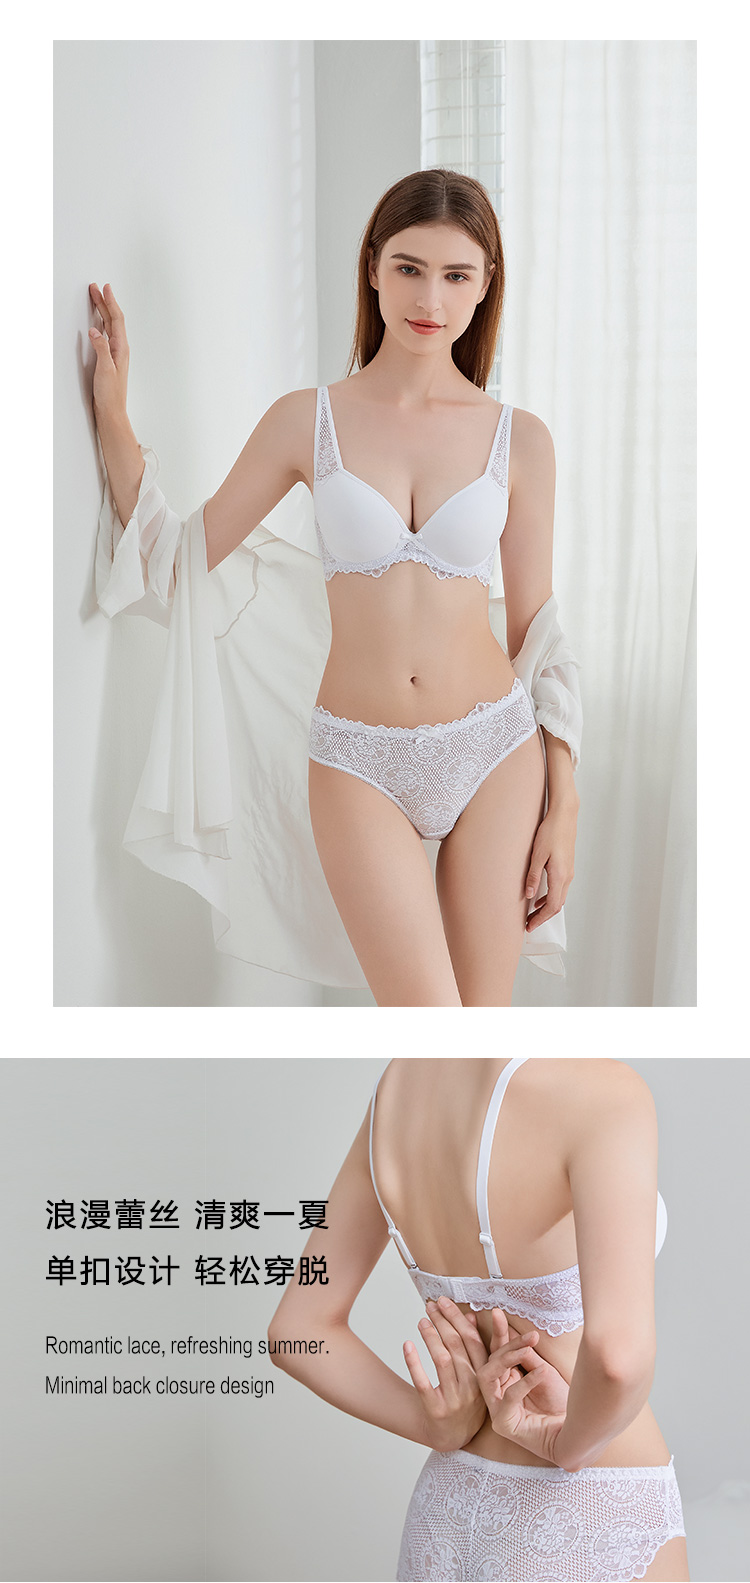 Weiyesi Underwire Soft Cup Bra Set 2136 / 2136-1/ 2136-2,Weiyesi - Fashion  bras and lingerie for women